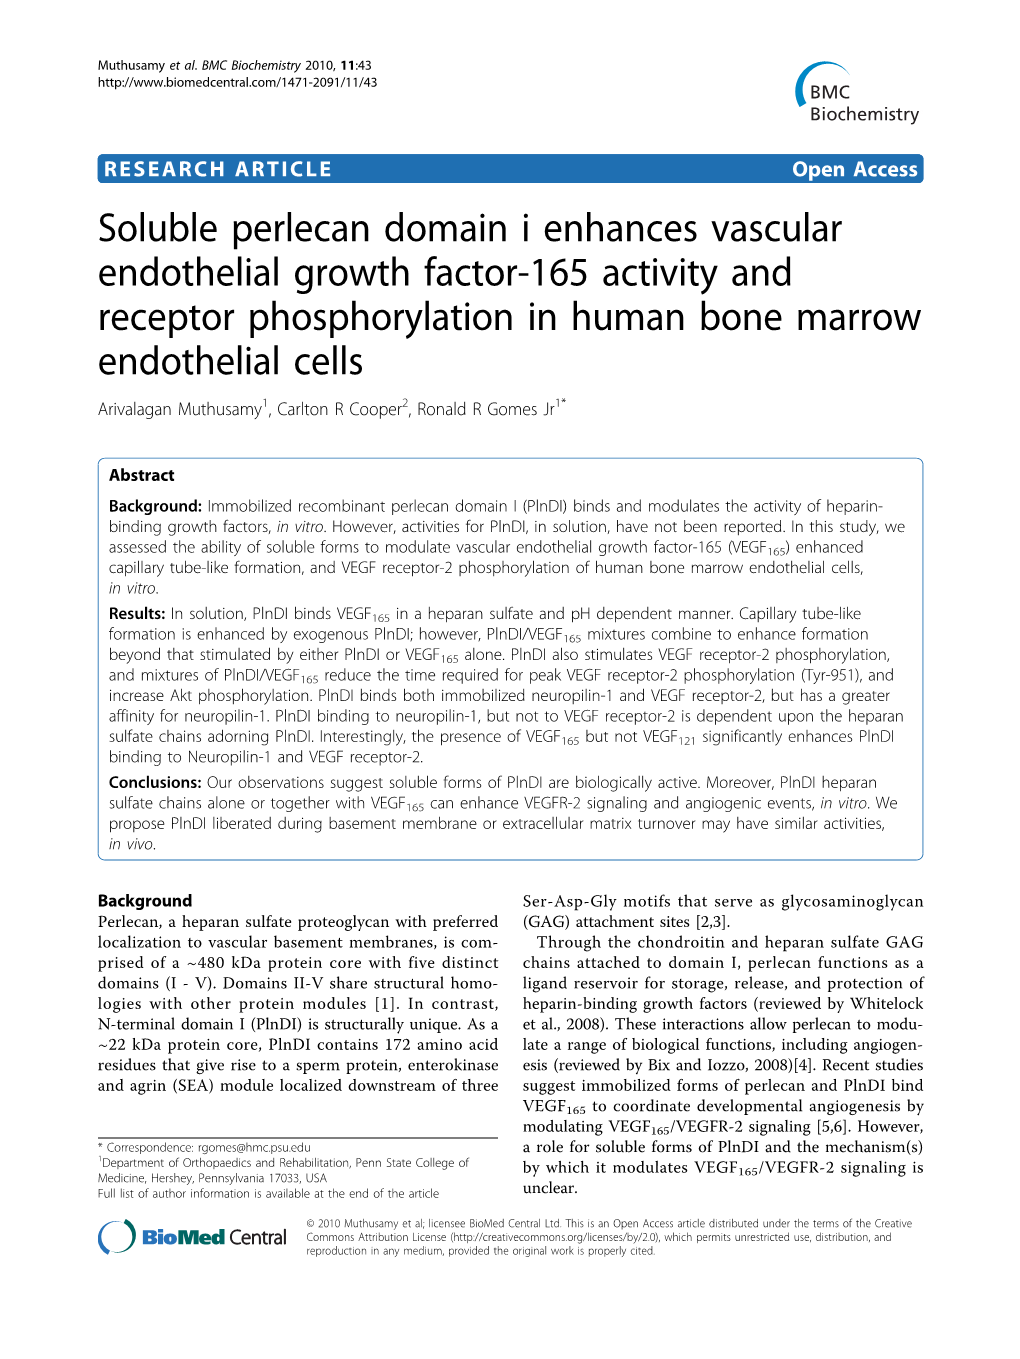 Soluble Perlecan Domain I Enhances Vascular Endothelial Growth Factor